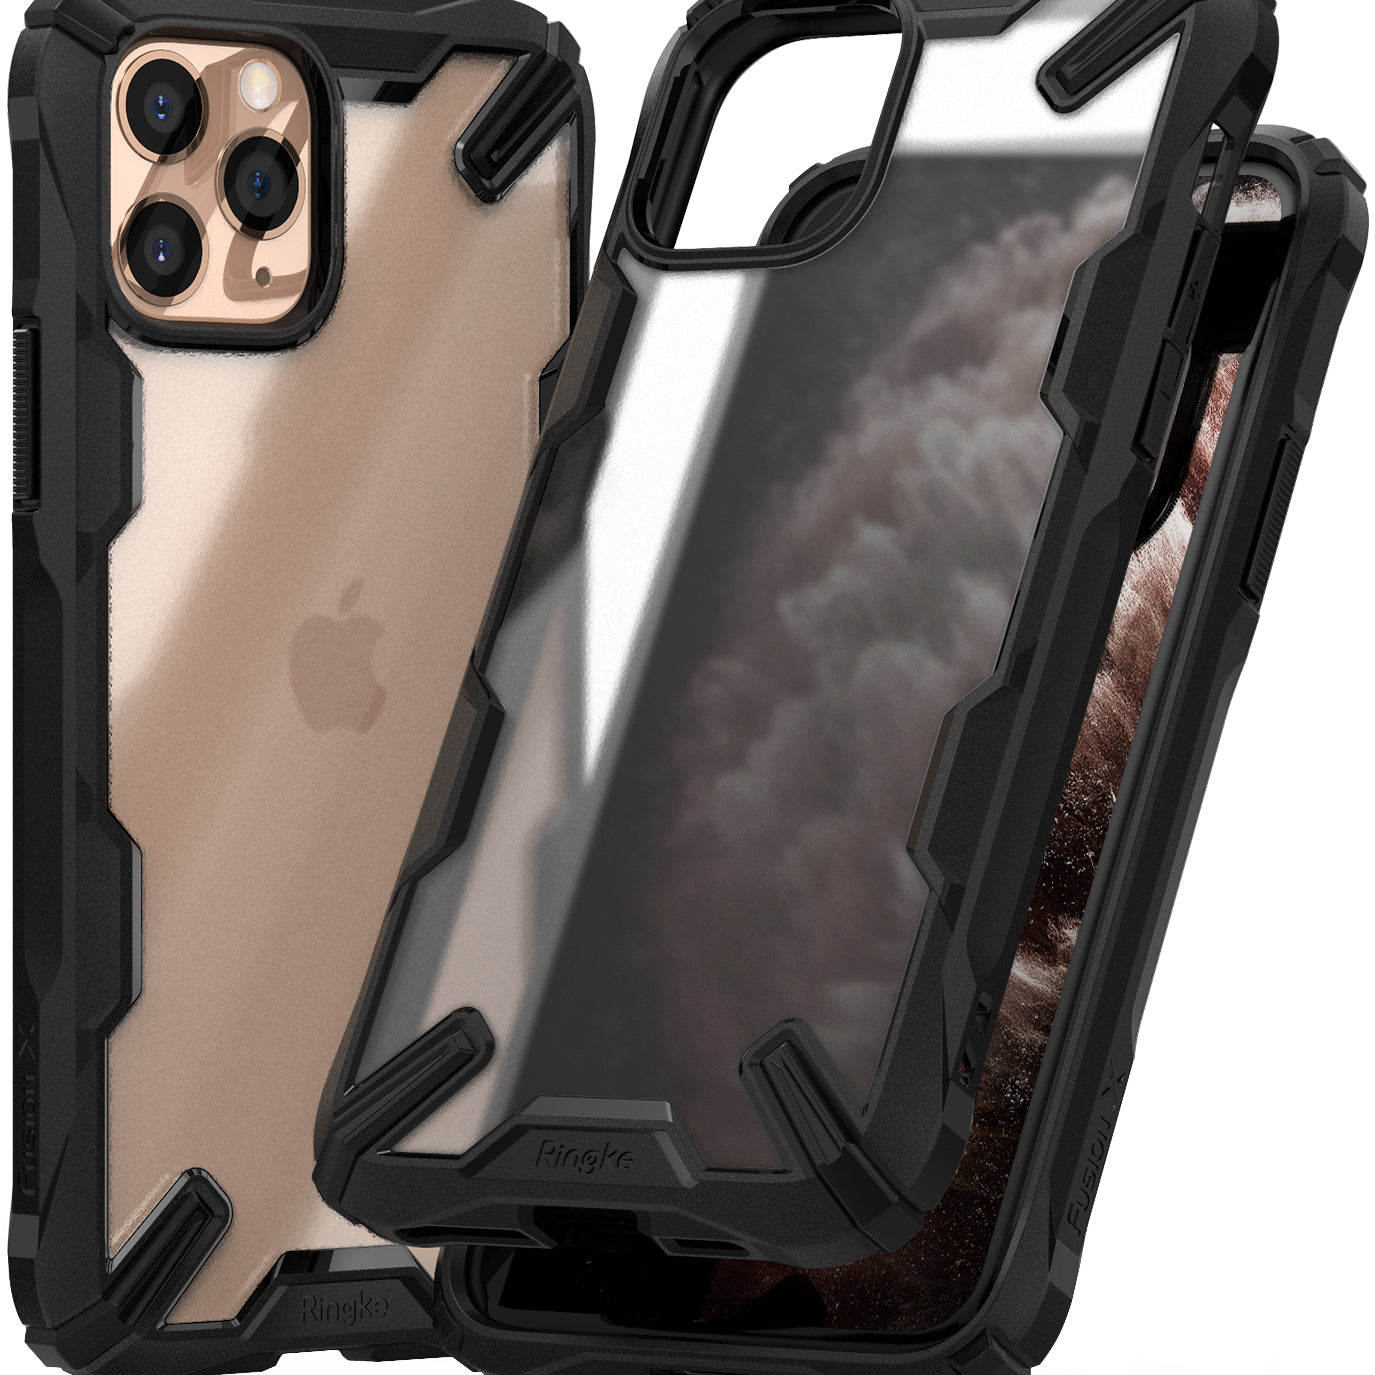 Ringke Fusion-X Matte Designed Case for iPhone 11 Pro Matte Black